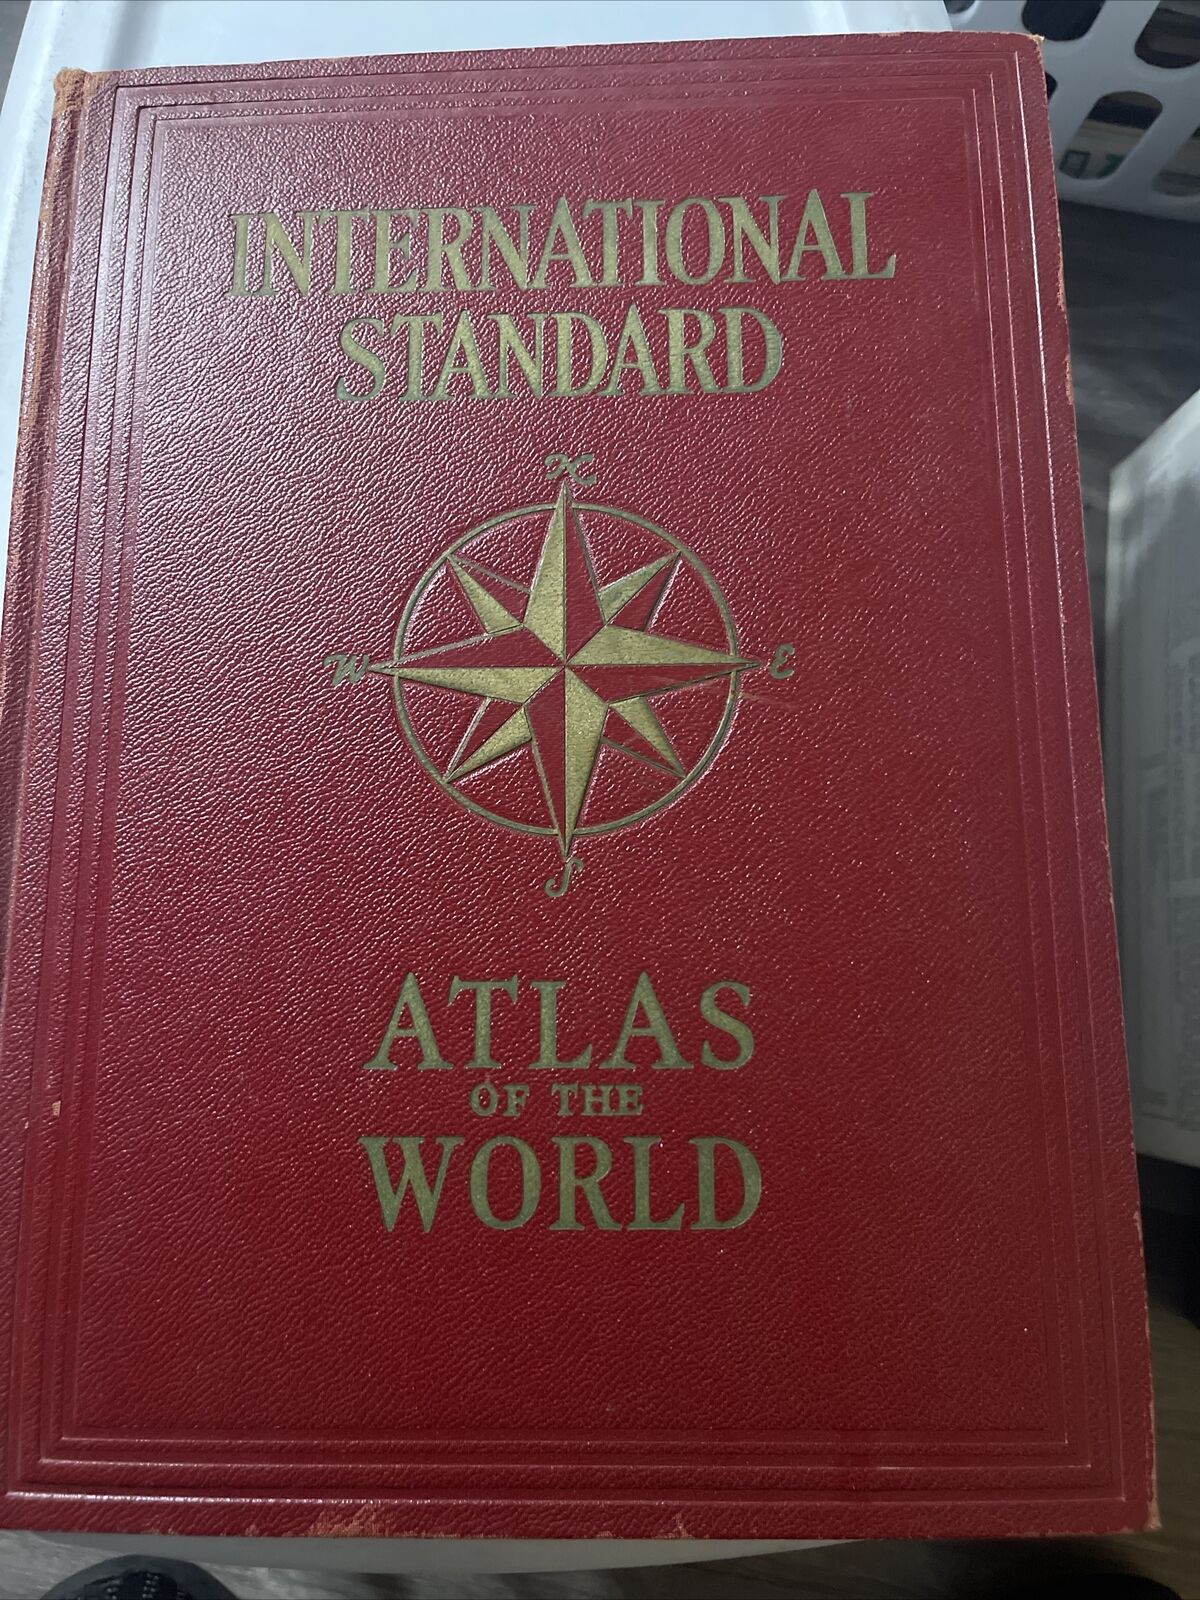 The International Standard Encyclopedic World Atlas and Gazetteer 1947